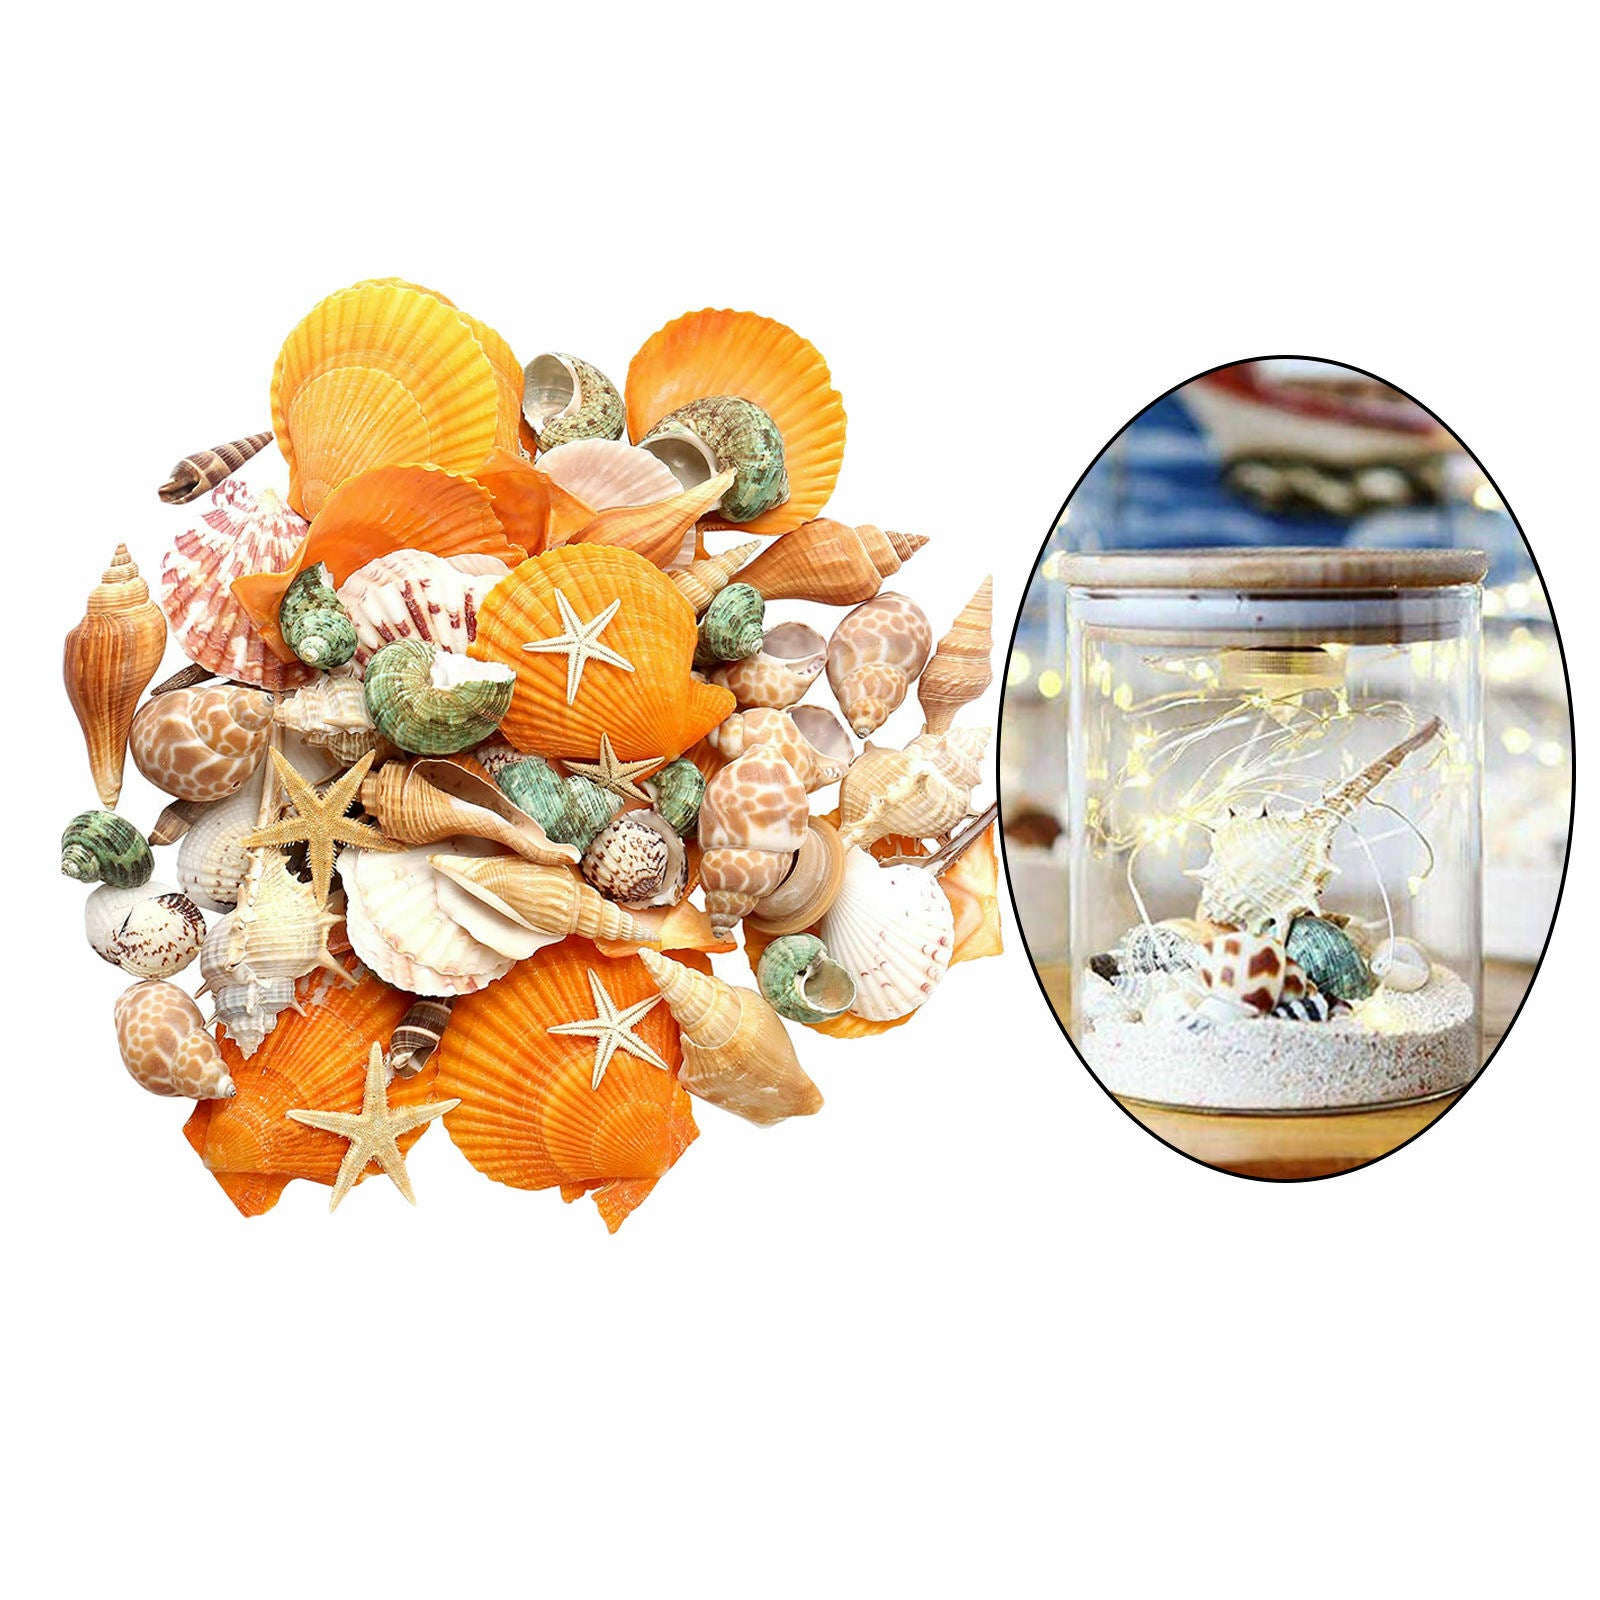 Aquarium Terrarium Natural Seashells Fishing Tank Decor View Accessories